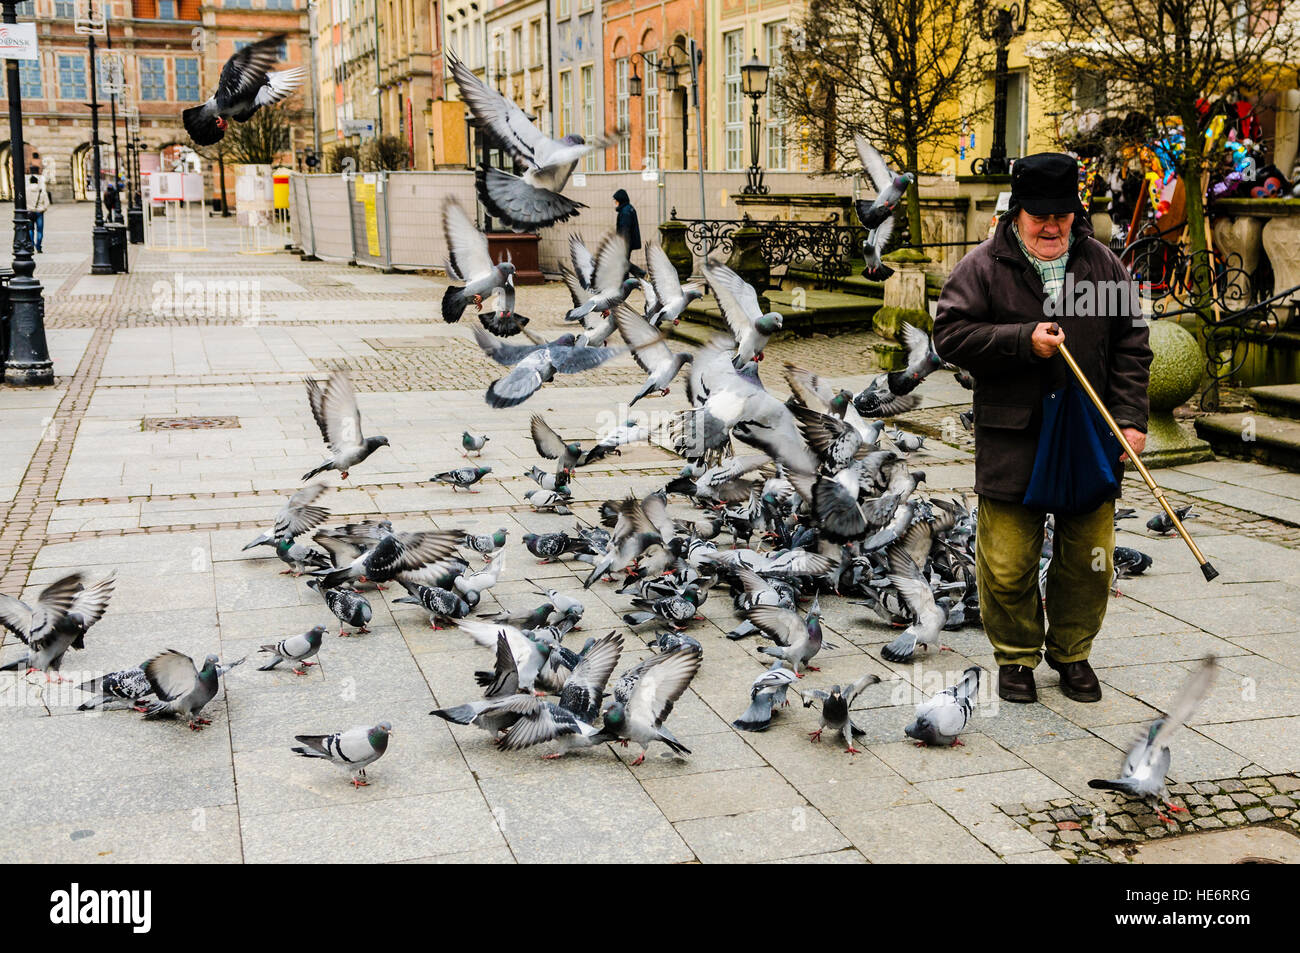 Pigeons fly around an elderly man as he walks along Dlugi Targ, Gdansk Stock Photo